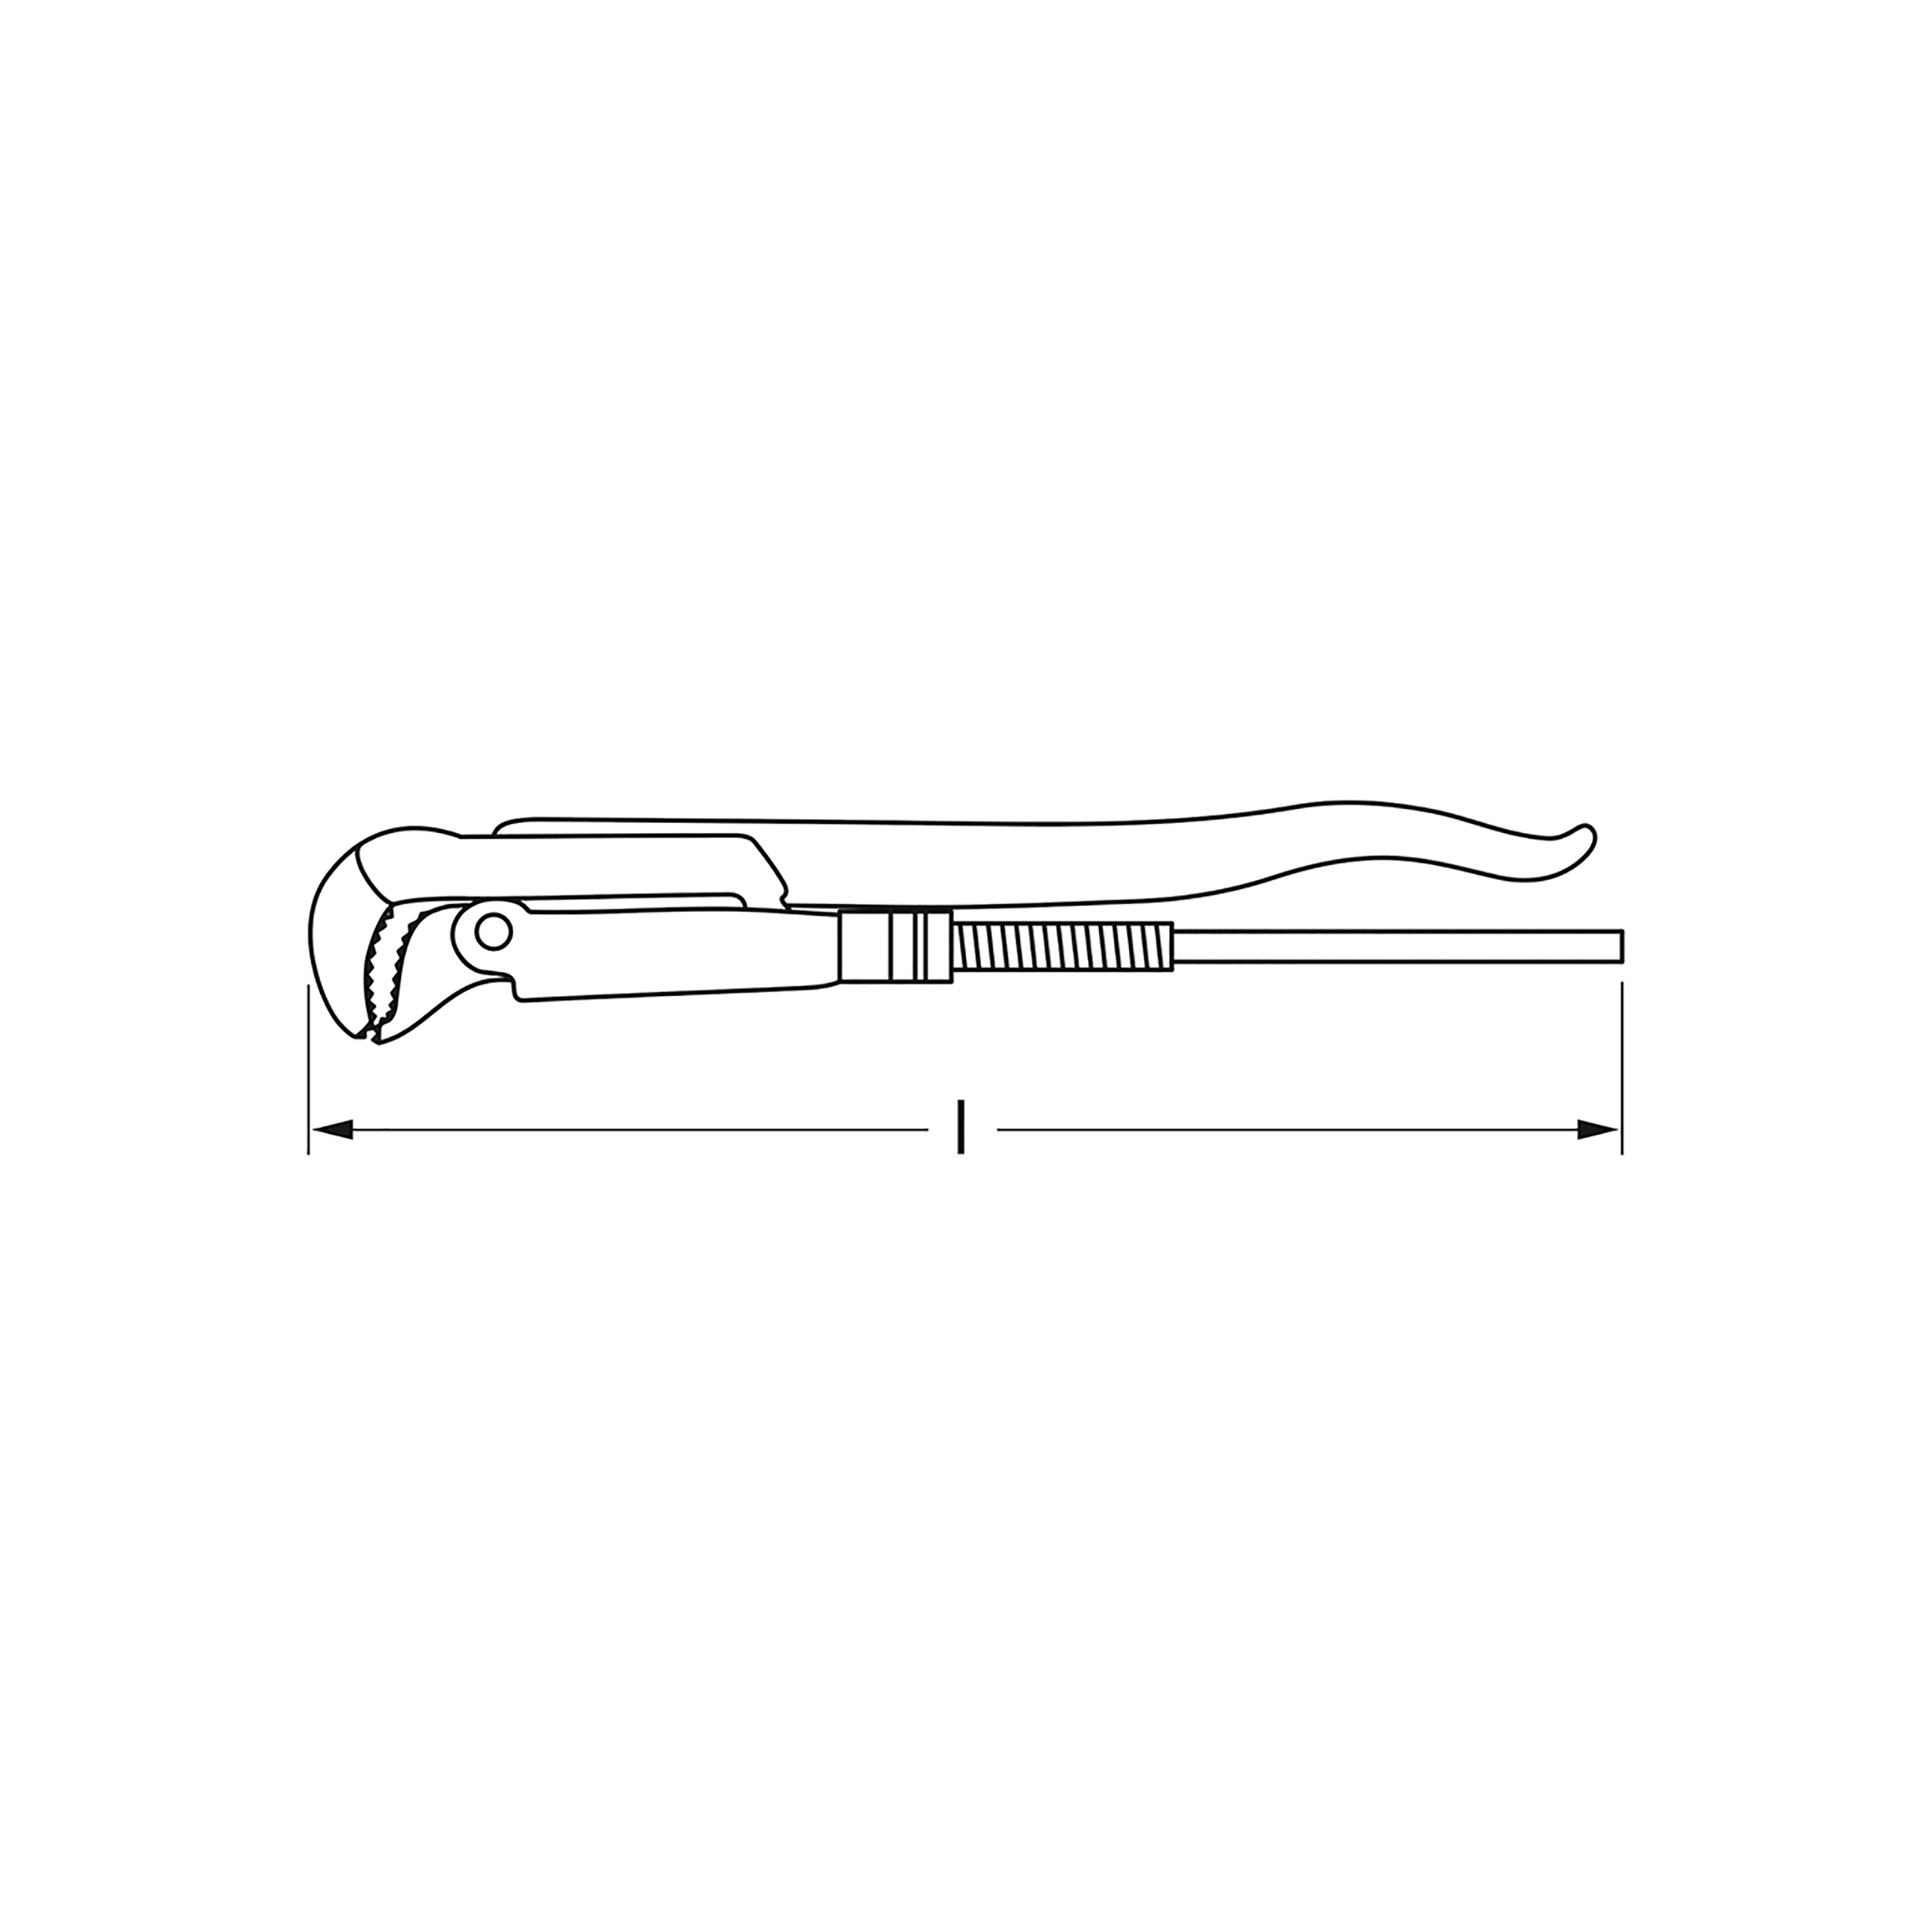 Eckrohrzange, S-Maul, DIN 5234 C, 10-110 mm (3"), MATADOR Art.-Nr.: 05960005